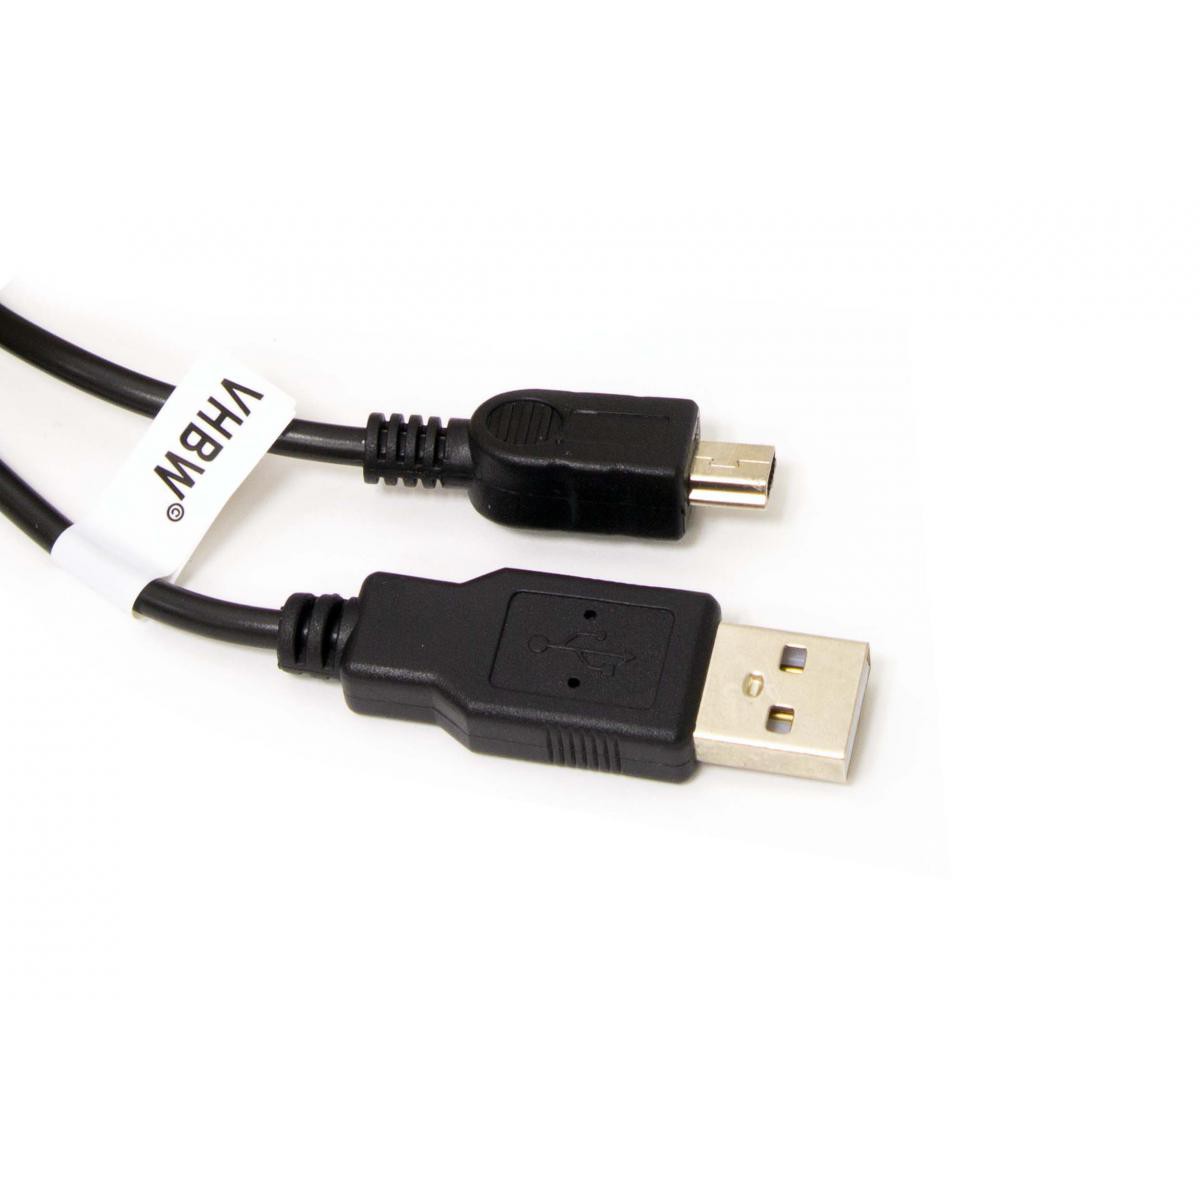 Vhbw - Câble USB A-Mini-B 5 pôles noir/black, longueur 1m, pour CANON DIGITAL IXUS, remplace Canon IFC-300PCU Nikon UC-E3 Pentax I-USB6 Sony VMC-14UMB2 - Câble antenne